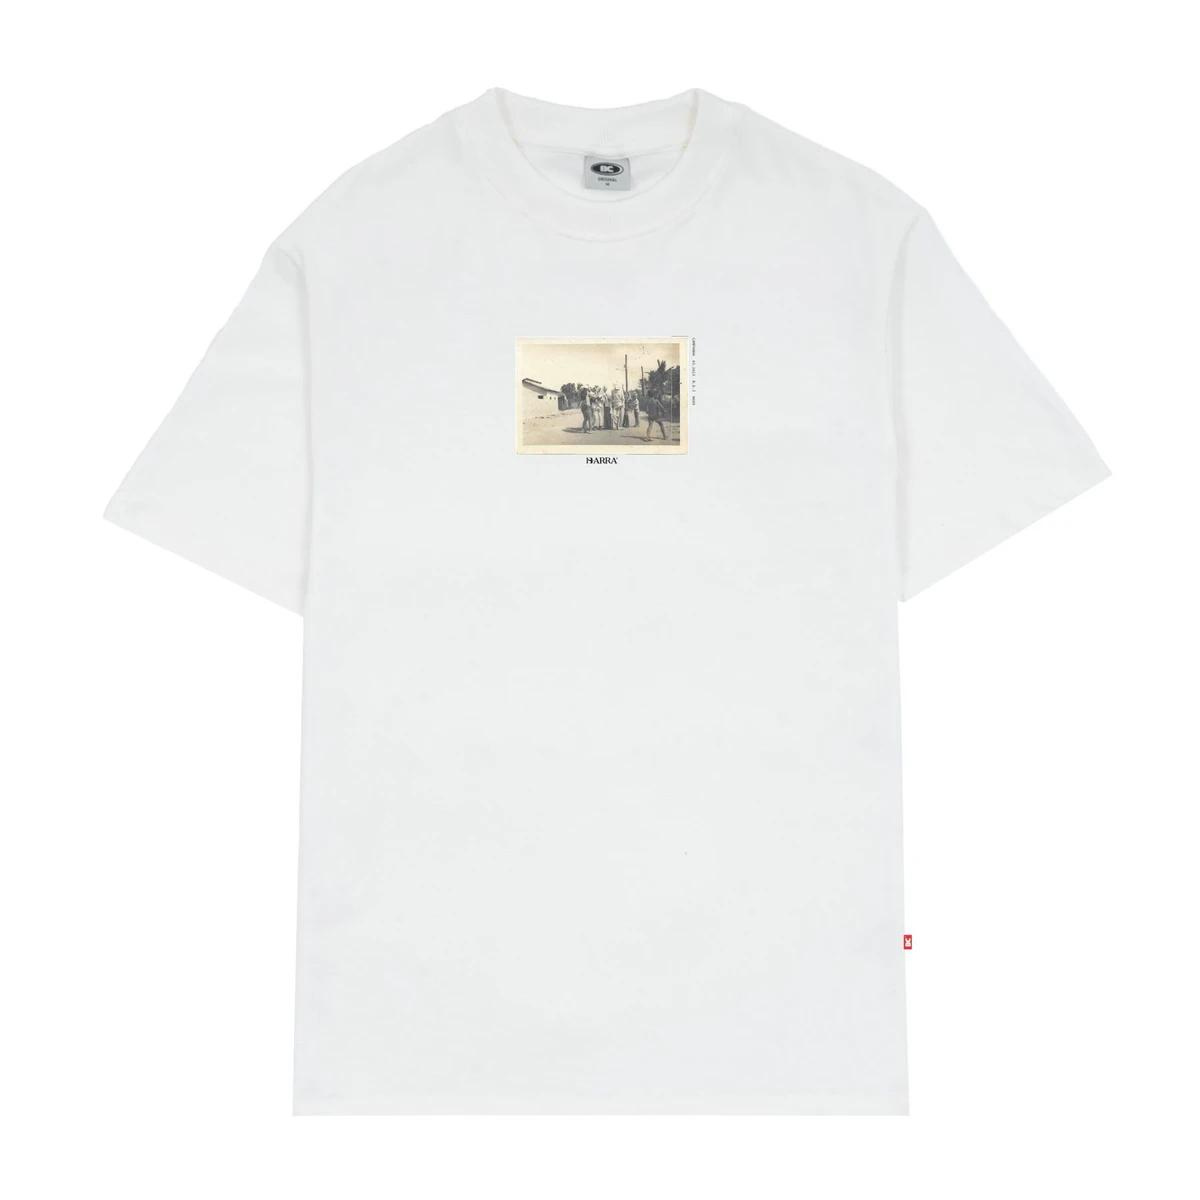 Barra Crew - Camiseta 'Ancestral' Off White